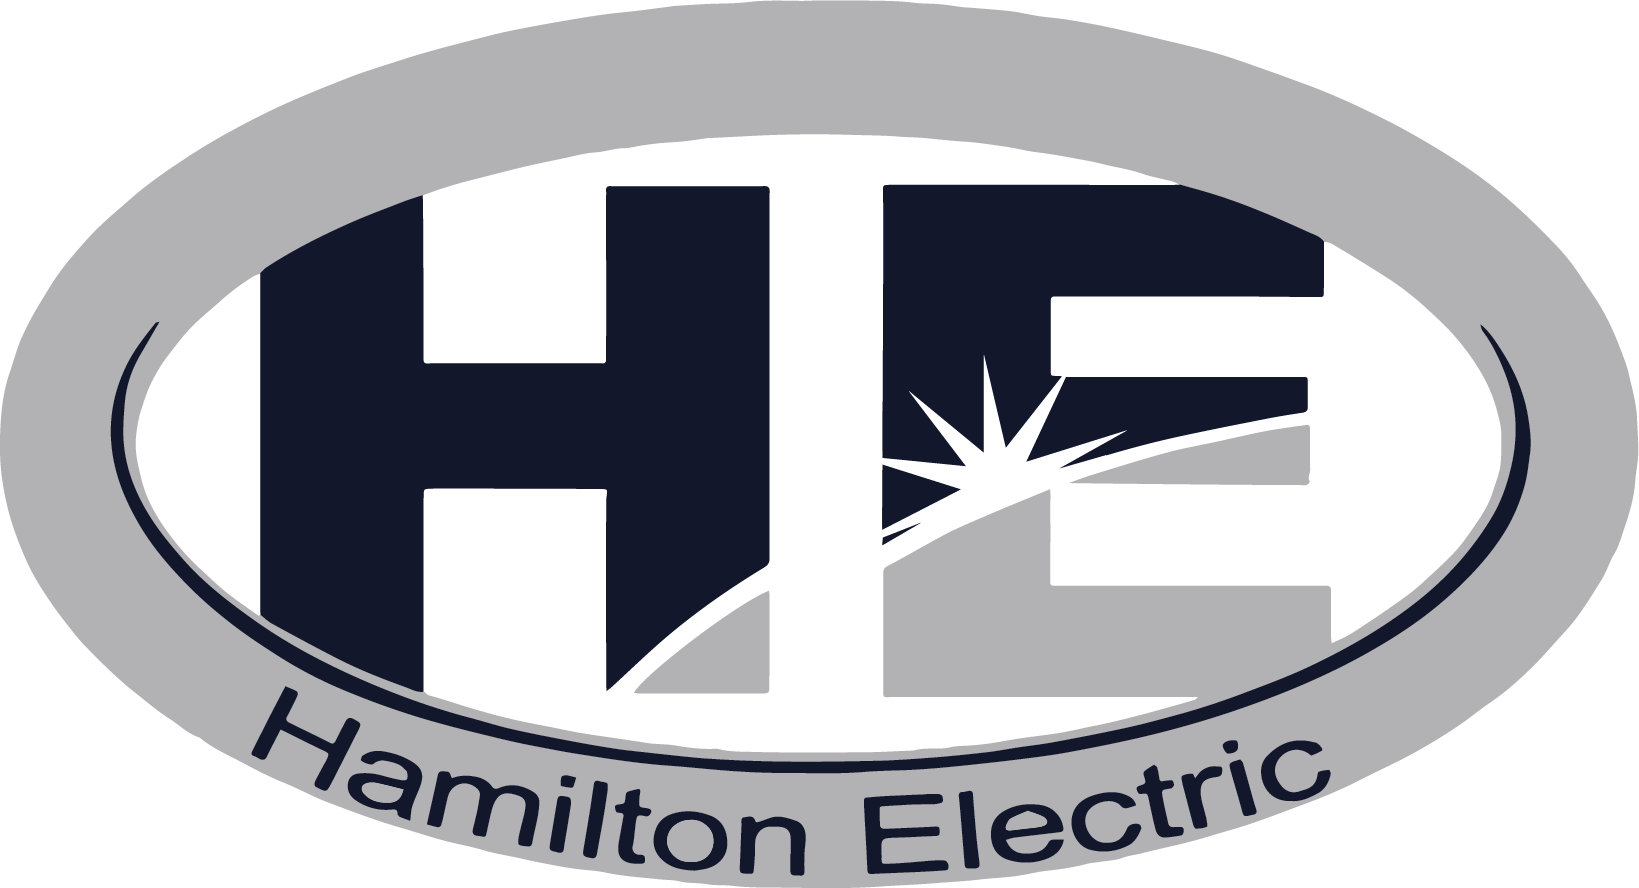 Hamilton Electric